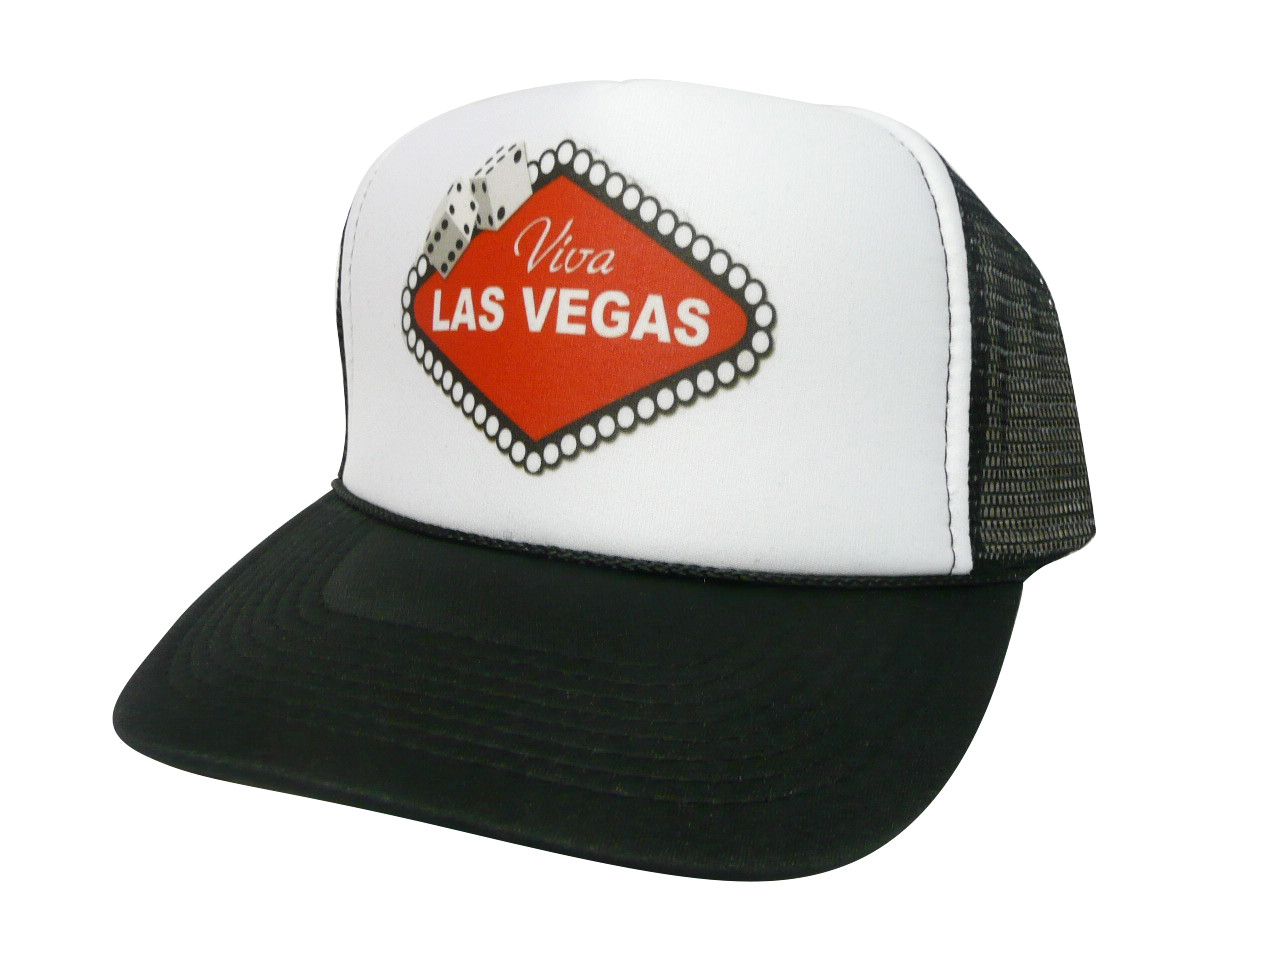 Viva Las Vegas Trucker Hat, Trucker Hats, Vacation Hats, Places Hats